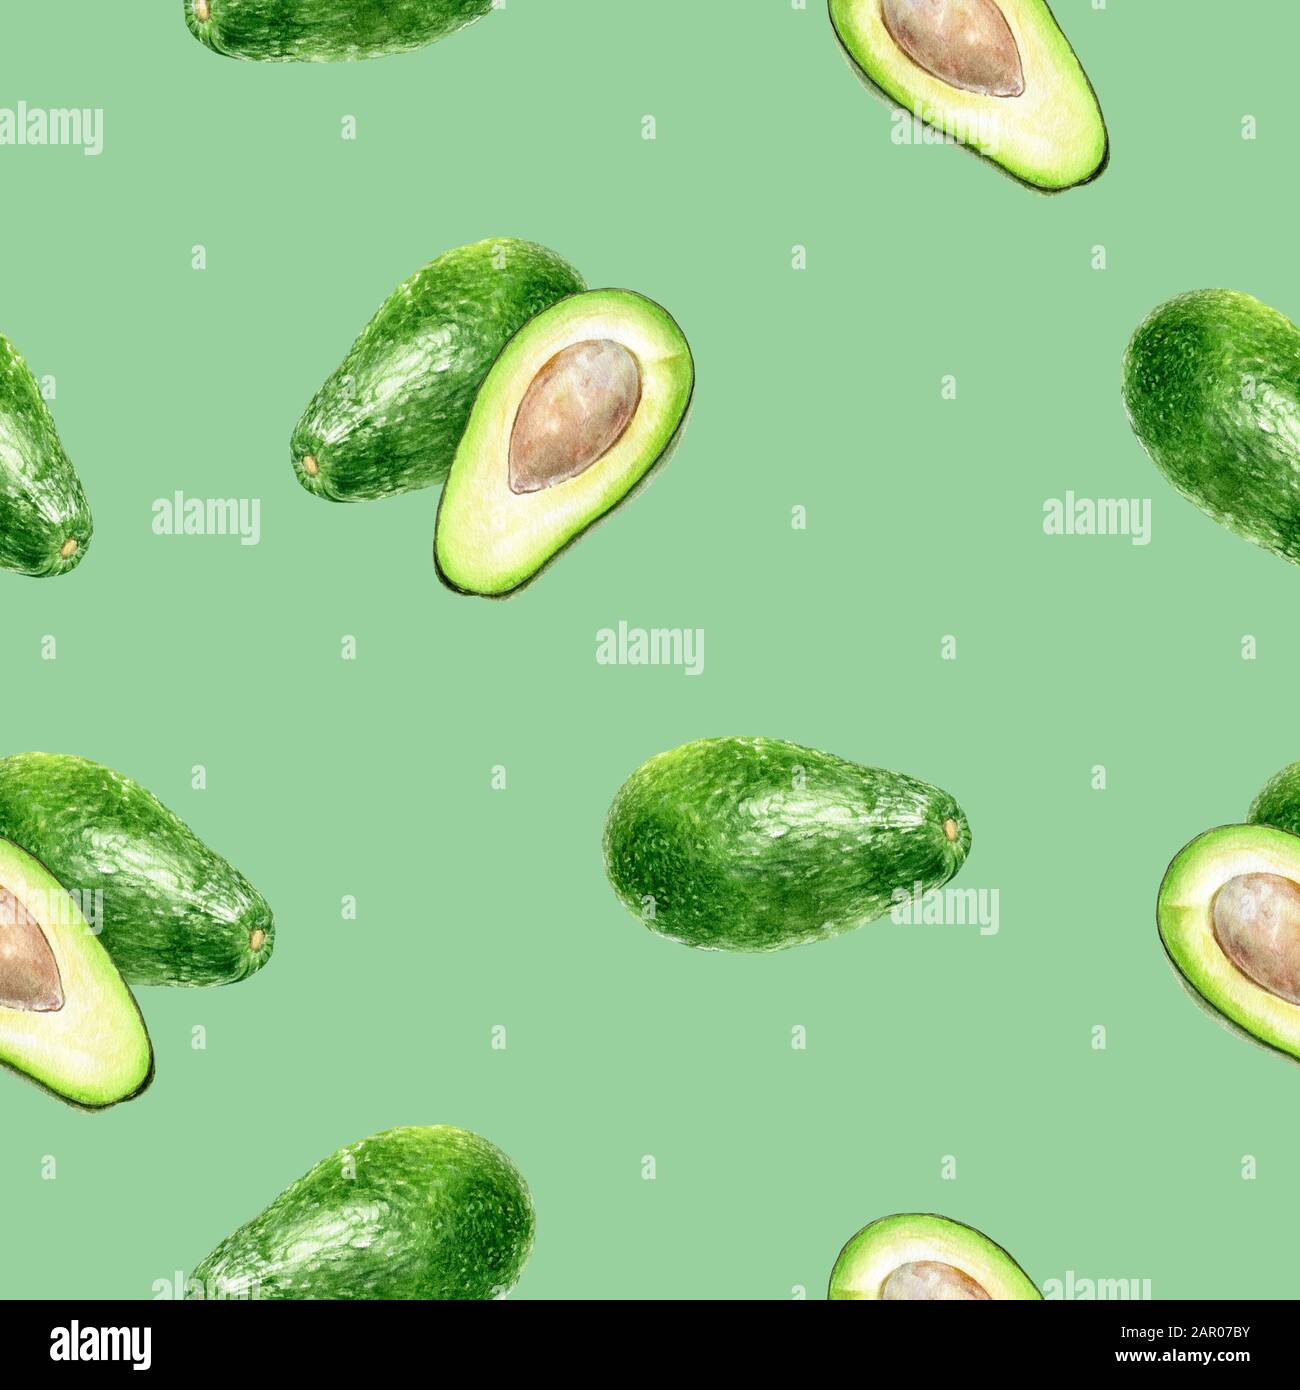 Avocado botanical illustration hi-res stock photography and images - Alamy